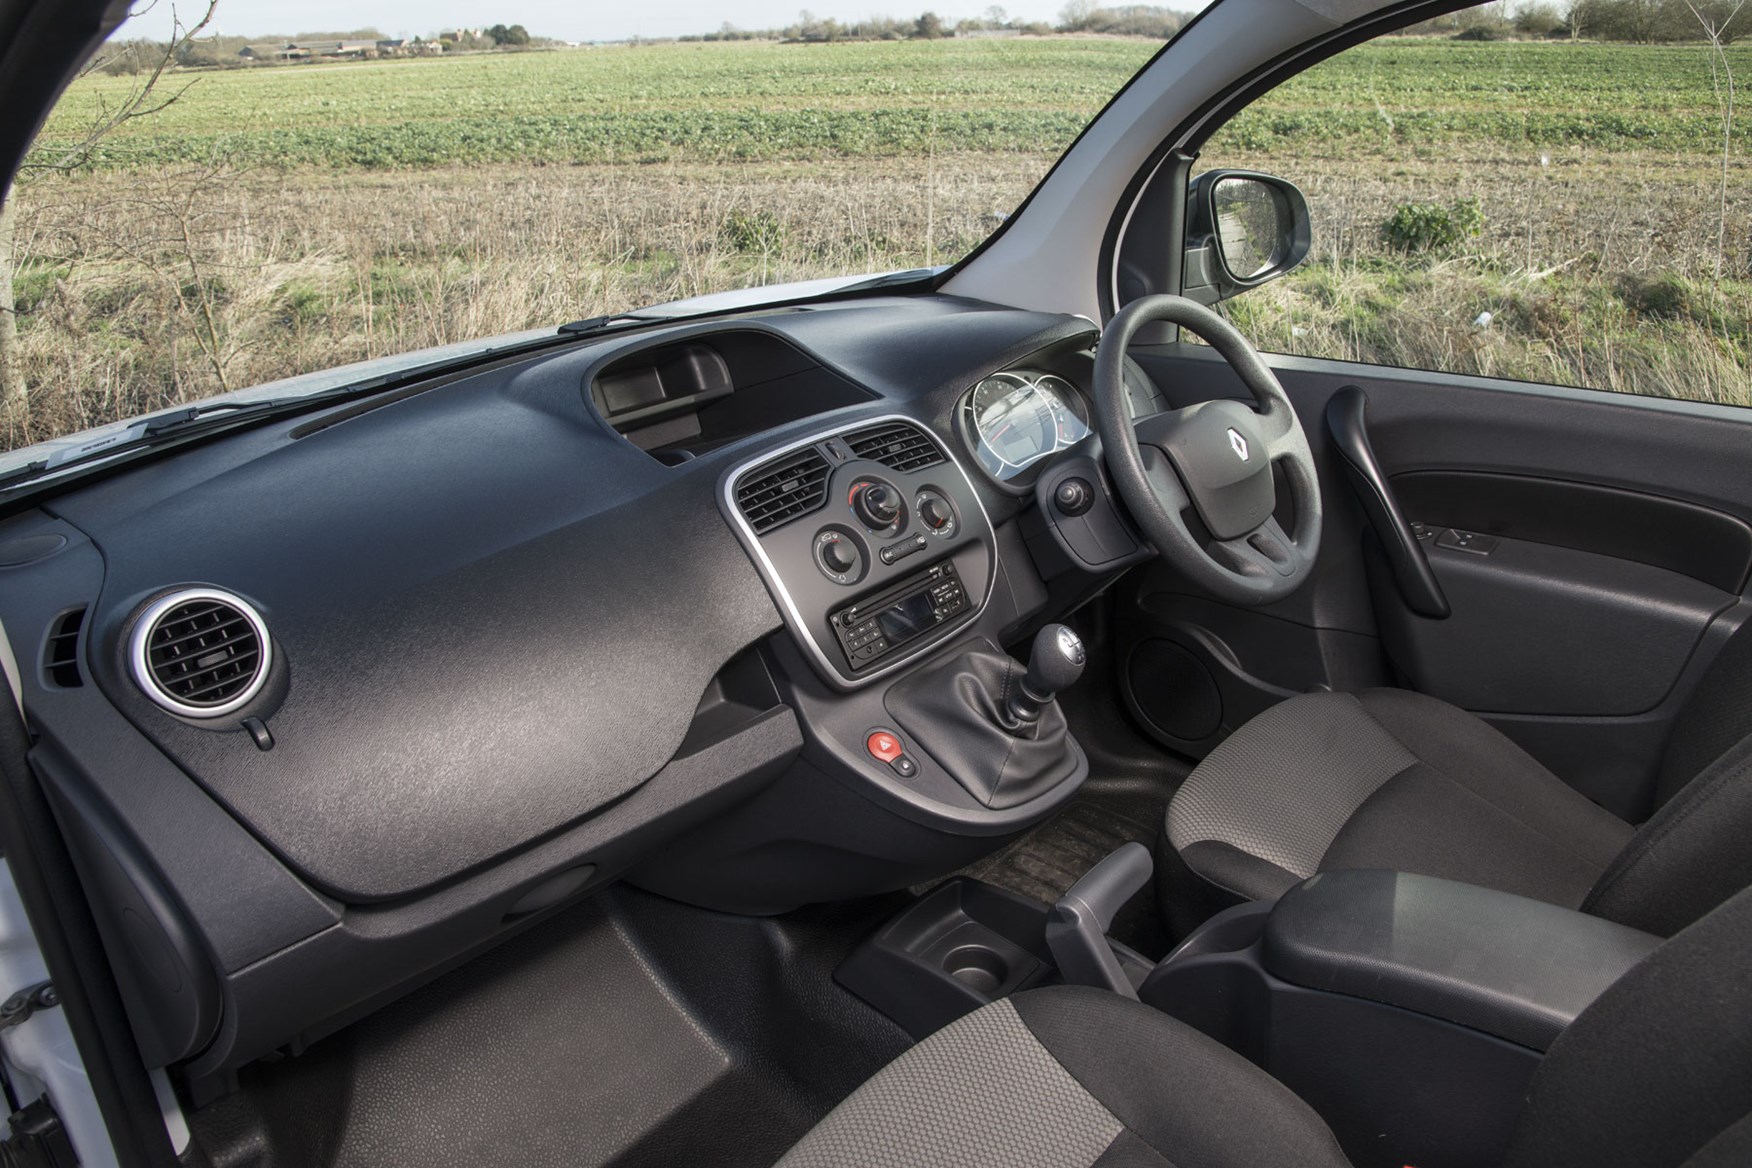 Renault Kangoo van review - cab interior